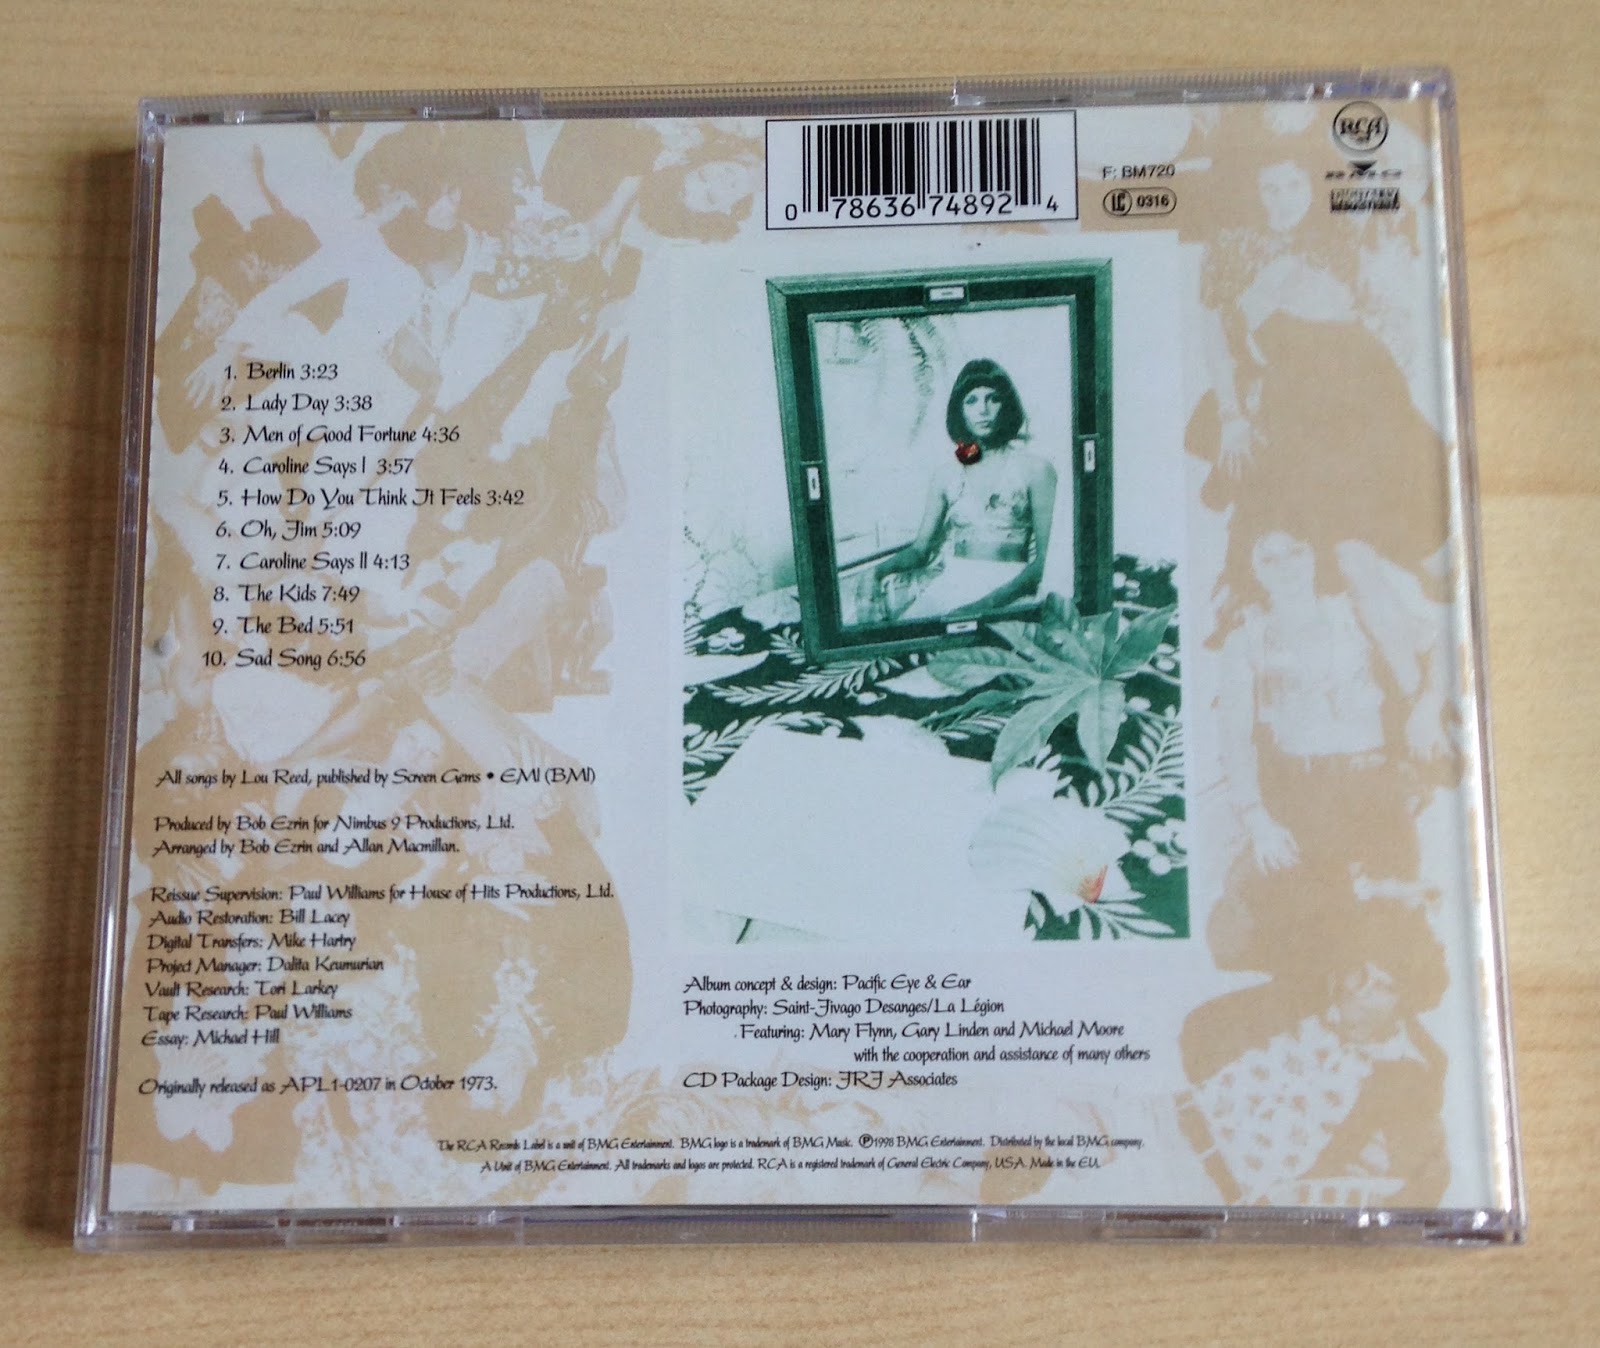 Berlin - Album by Lou Reed